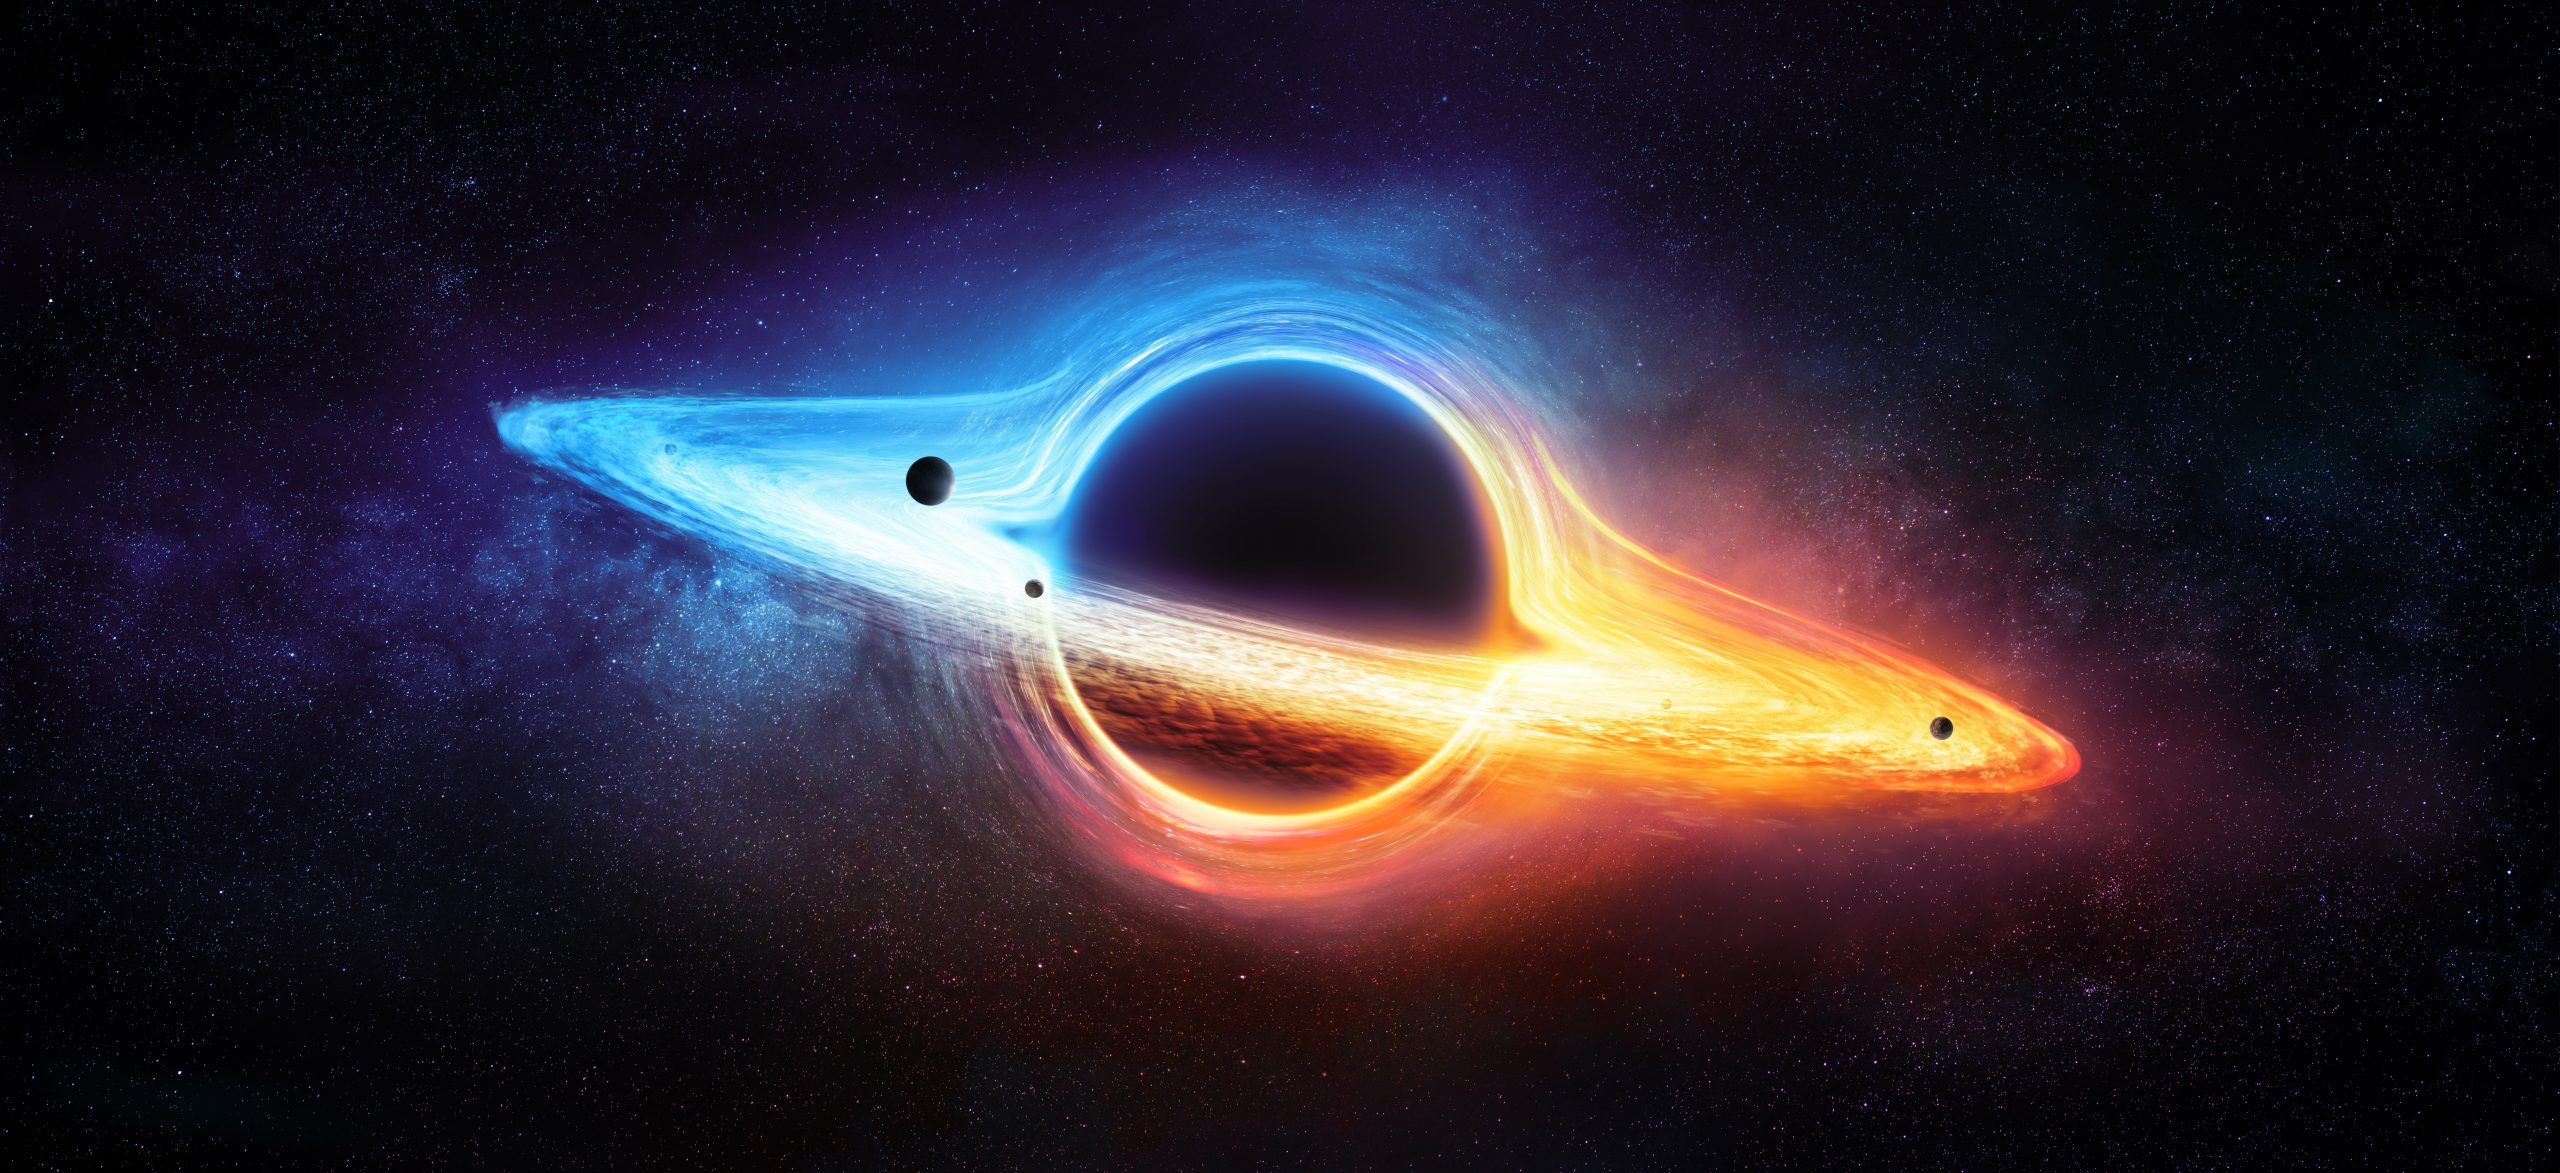 An illustration of a stellar-mass black hole in deep space. Depositphotos.